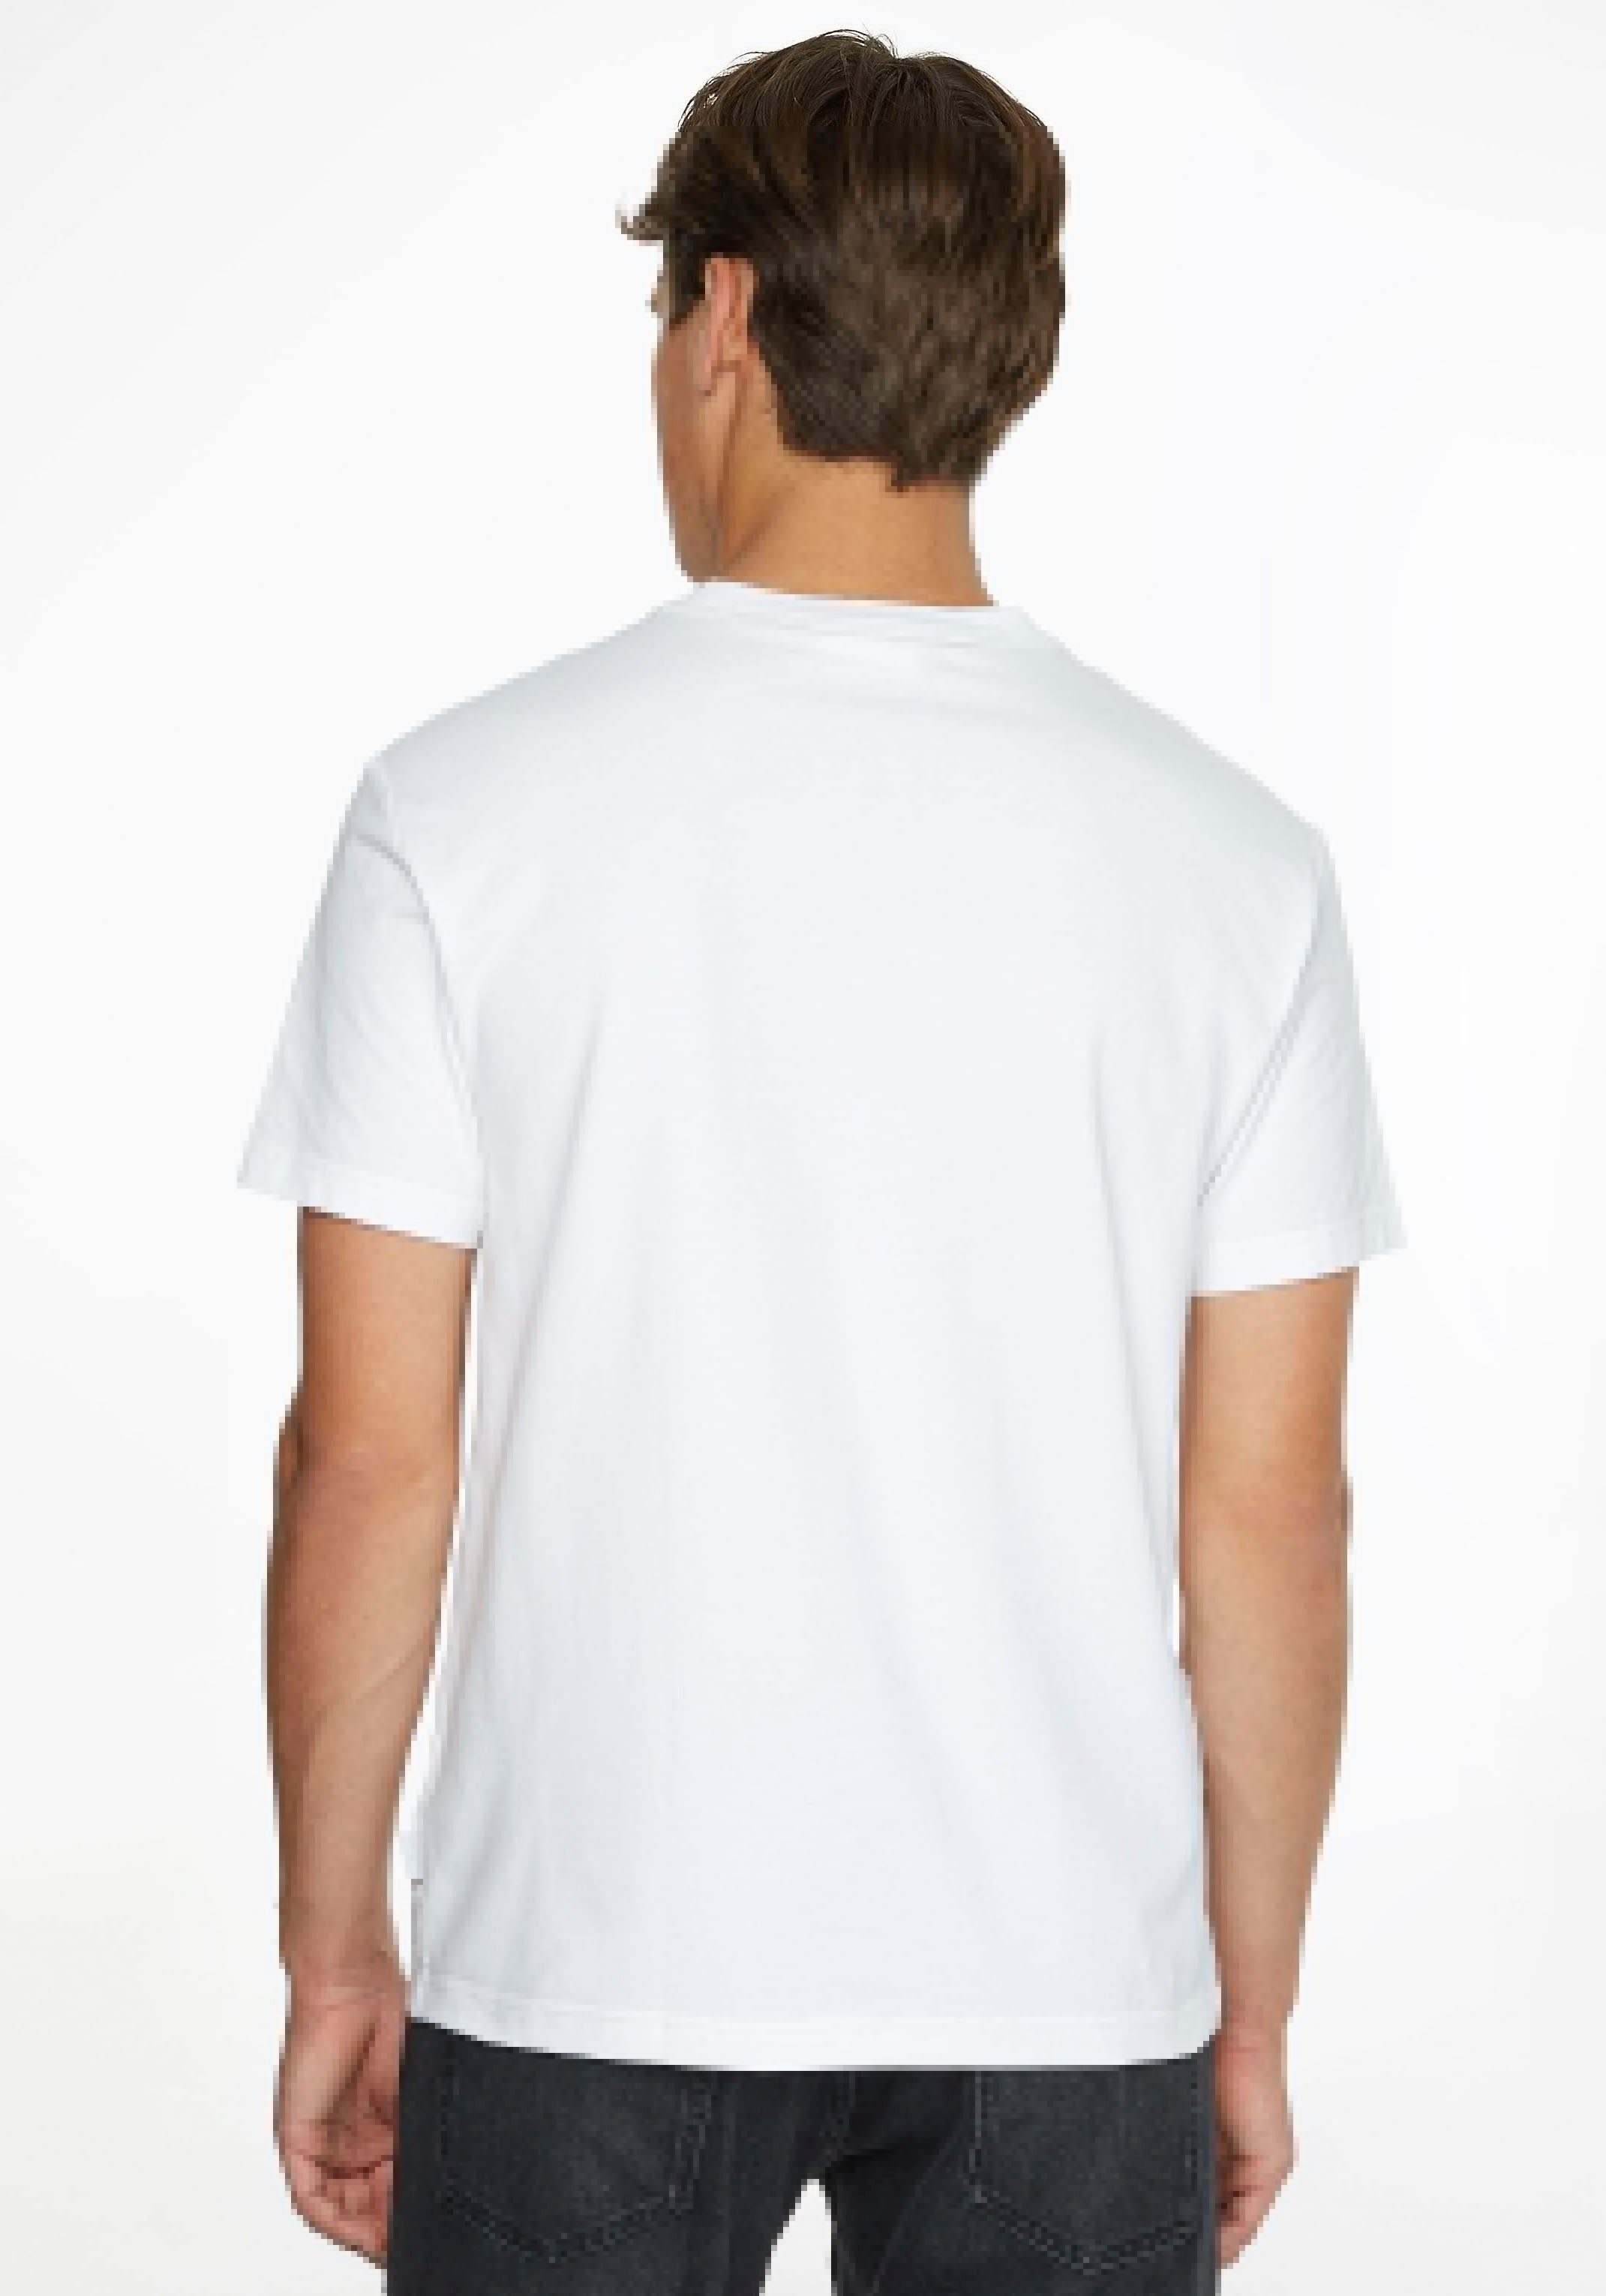 Klein LOGO T-Shirt Calvin bright MULTI COLOR white